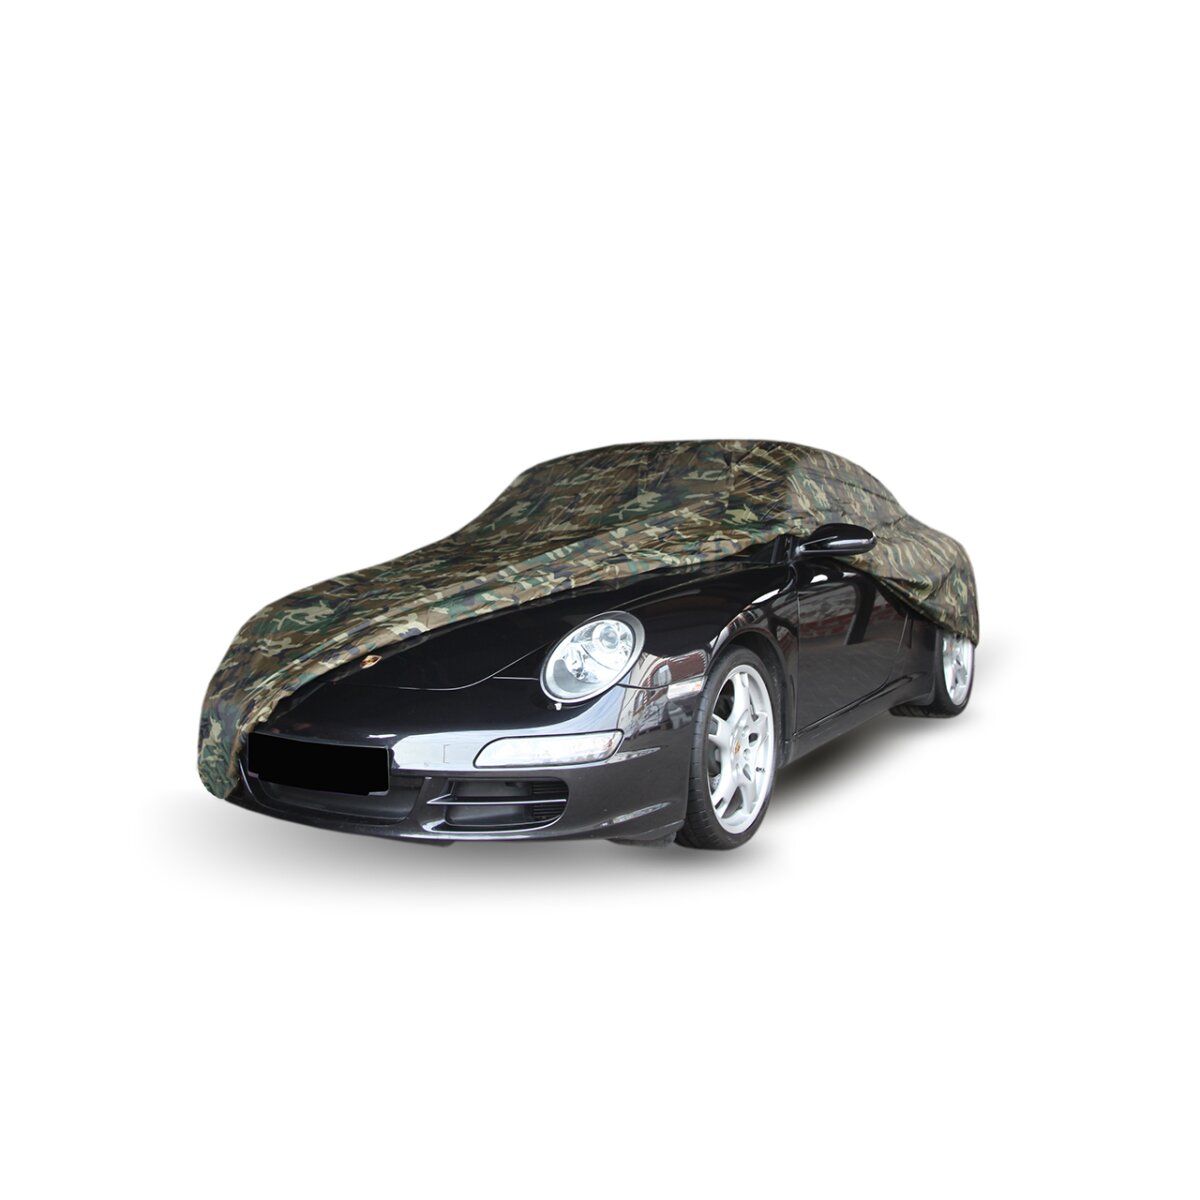 https://www.autoabdeckung.com/media/image/product/11094/lg/autoabdeckung-car-cover-camouflage-fuer-dacia-logan-ii-sr.jpg